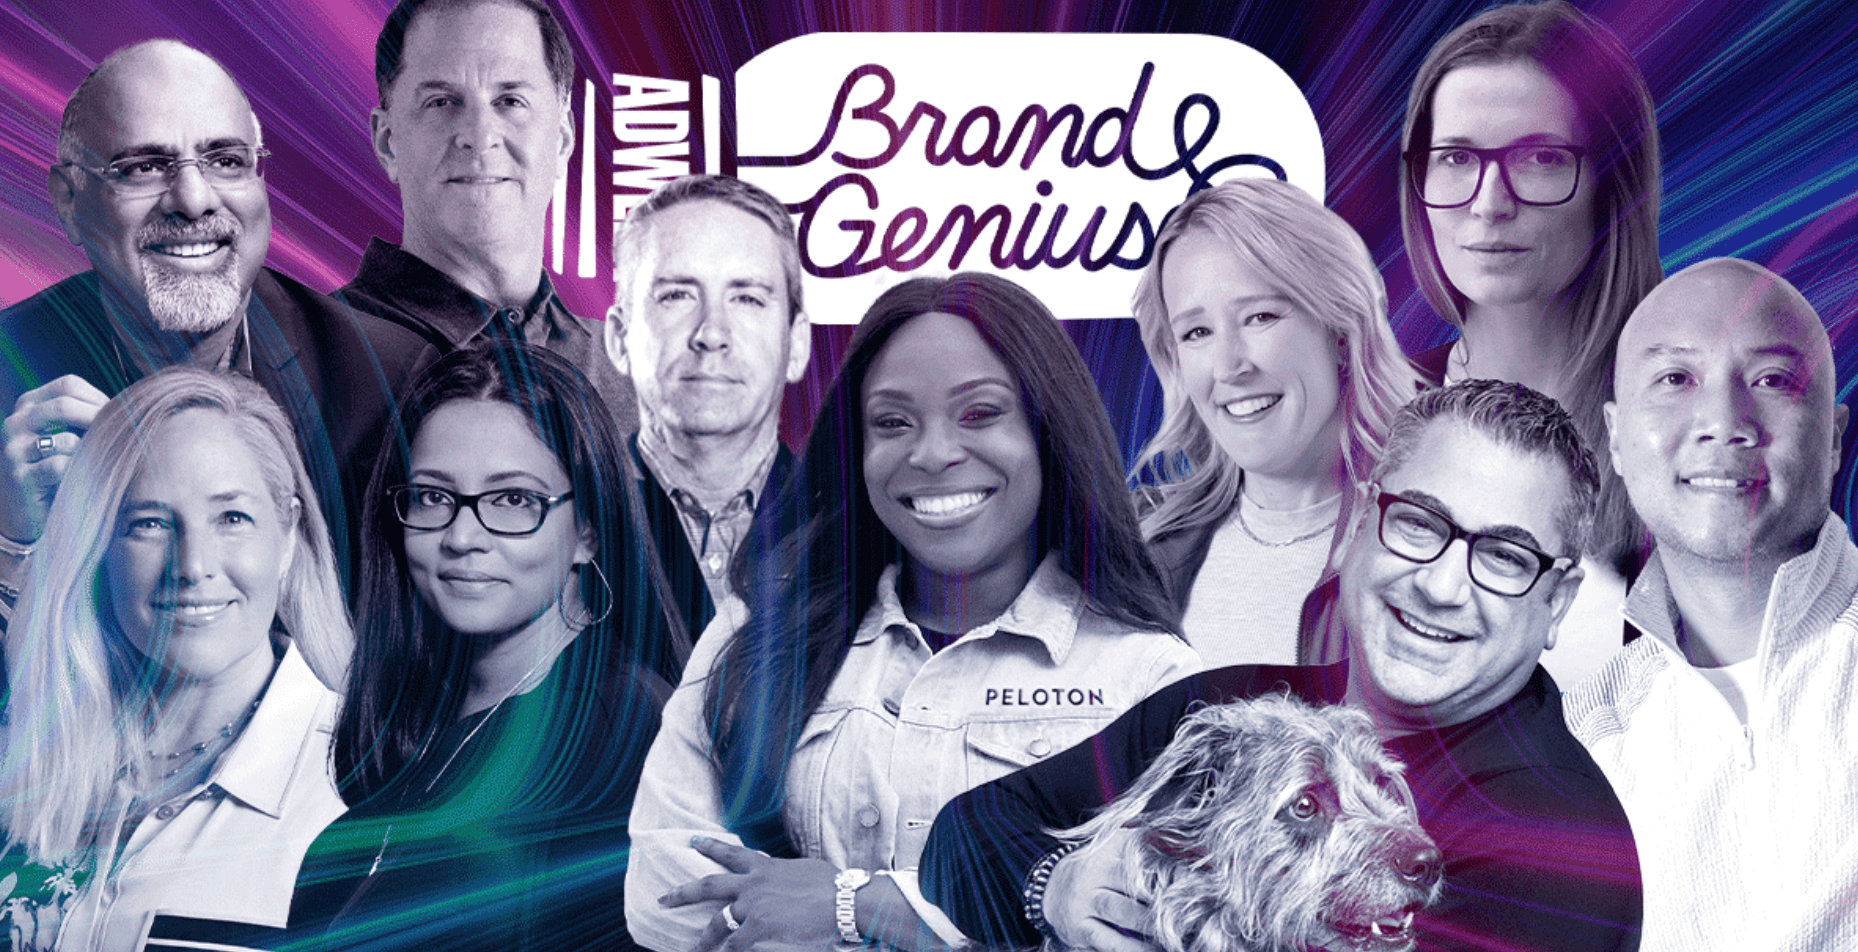 The 10 recipients of Adweek’s Brand Genius awards